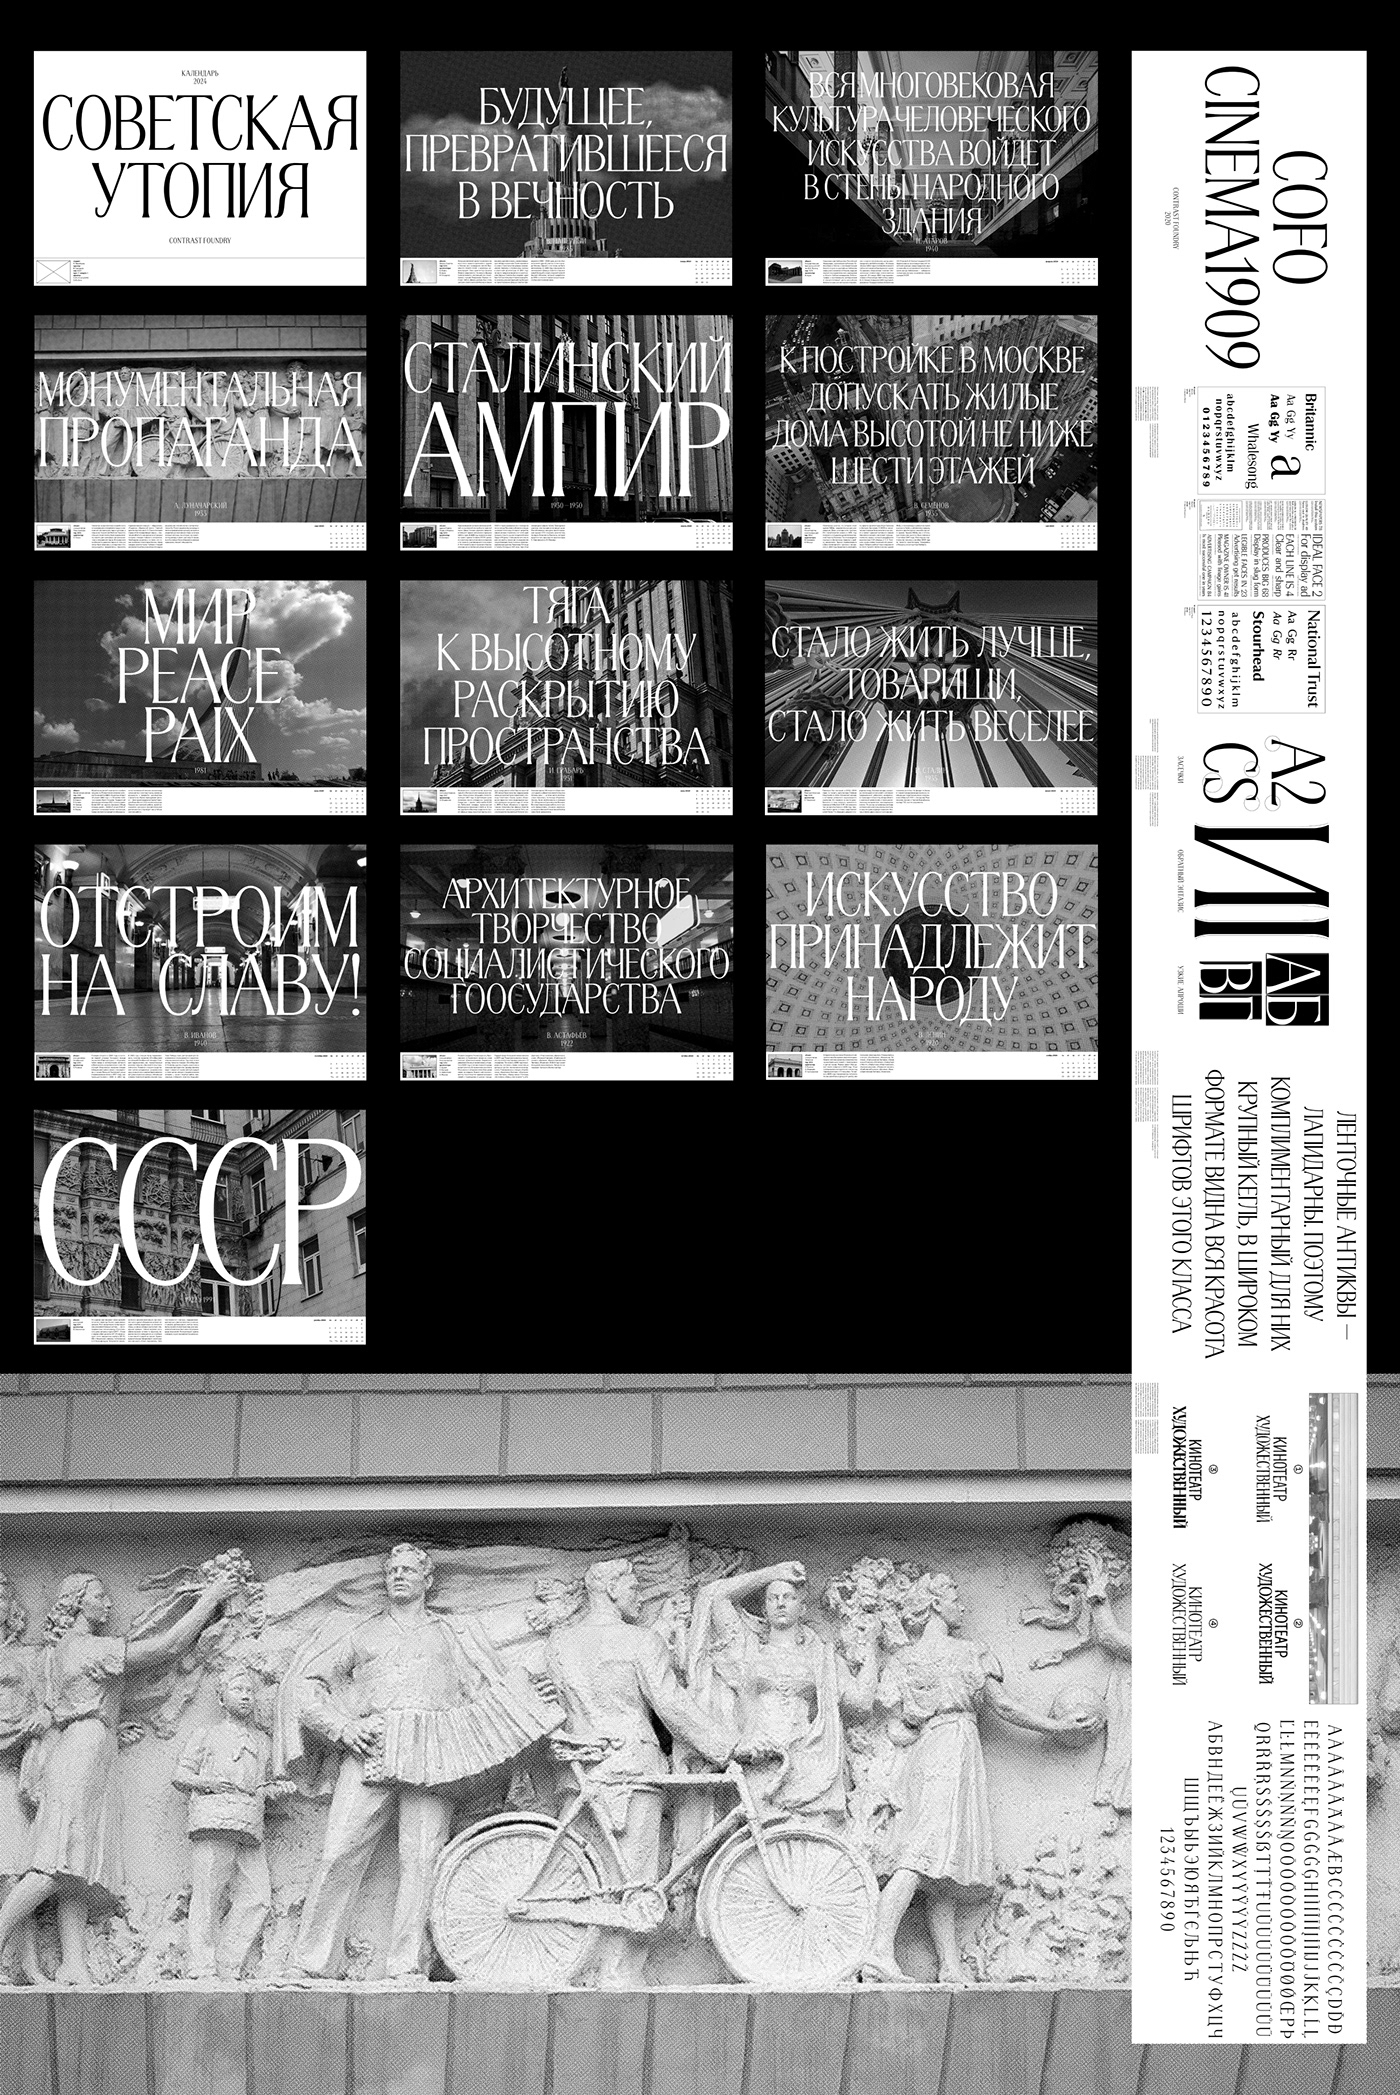 design font calendar design architecture Soviet architecture Soviet Union ussr Student work typography   Poster Design